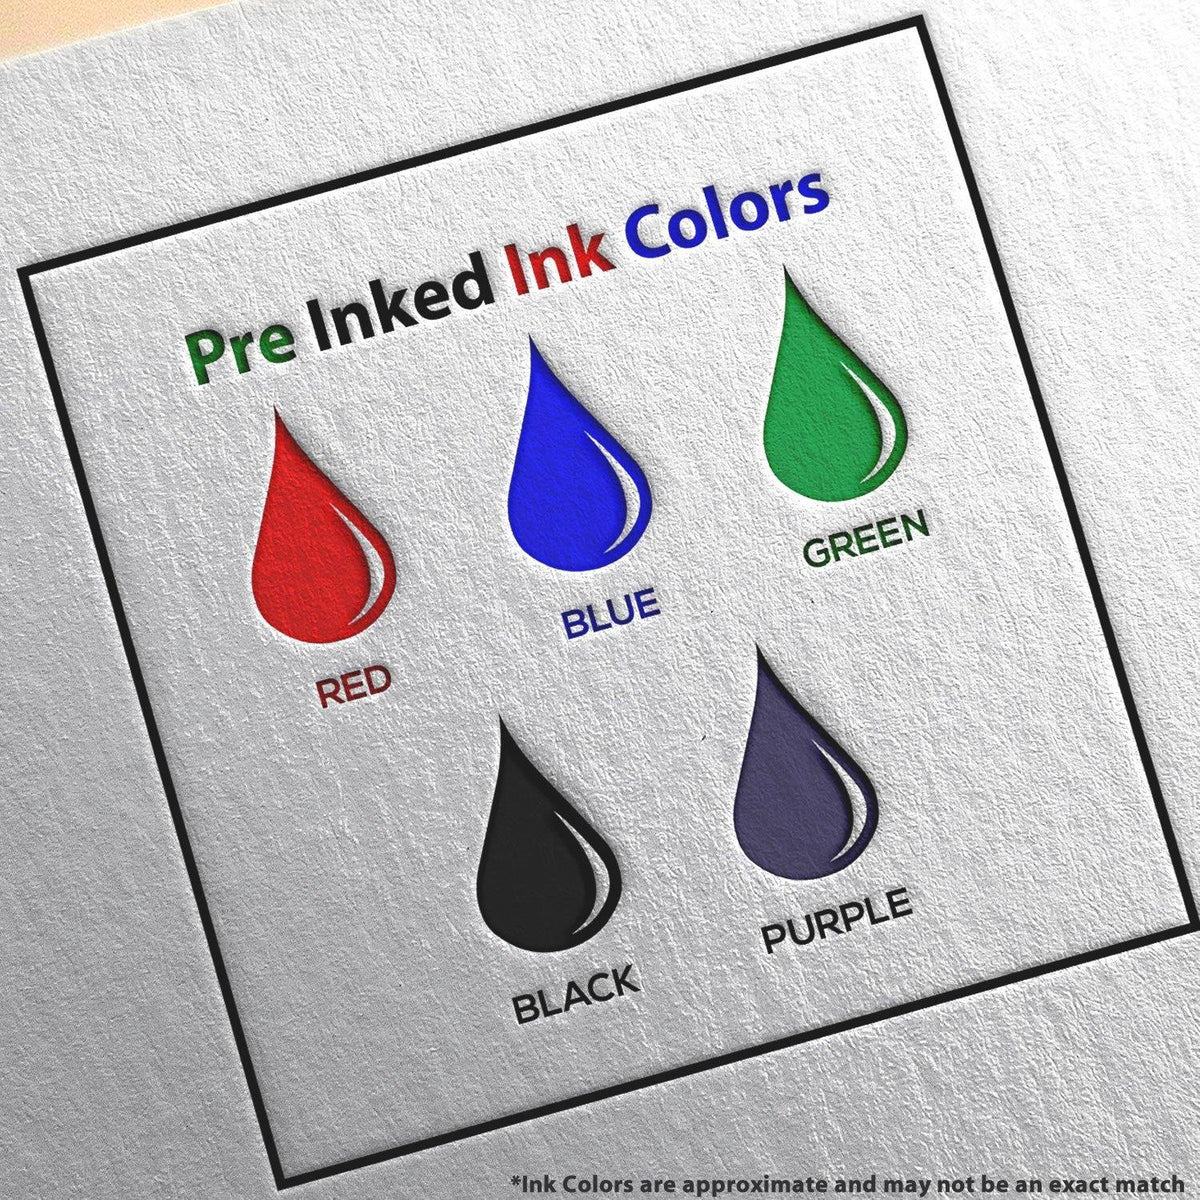 Slim Pre-Inked Express Mail International Stamp Ink Color Options